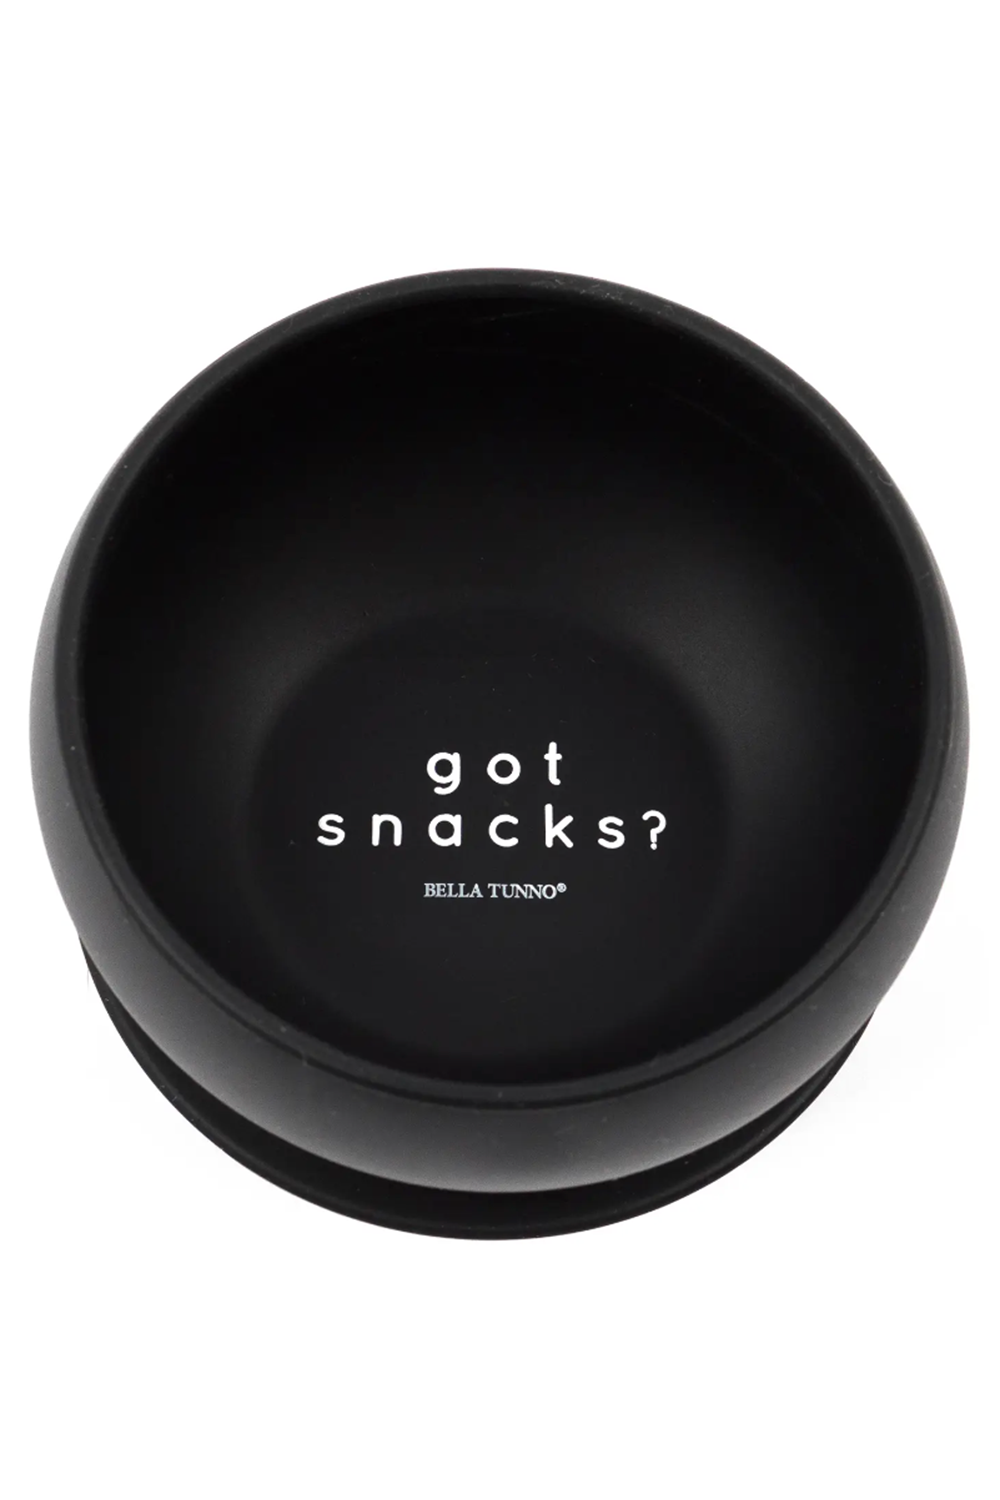 Wonder Suction Bowl - Got Snacks